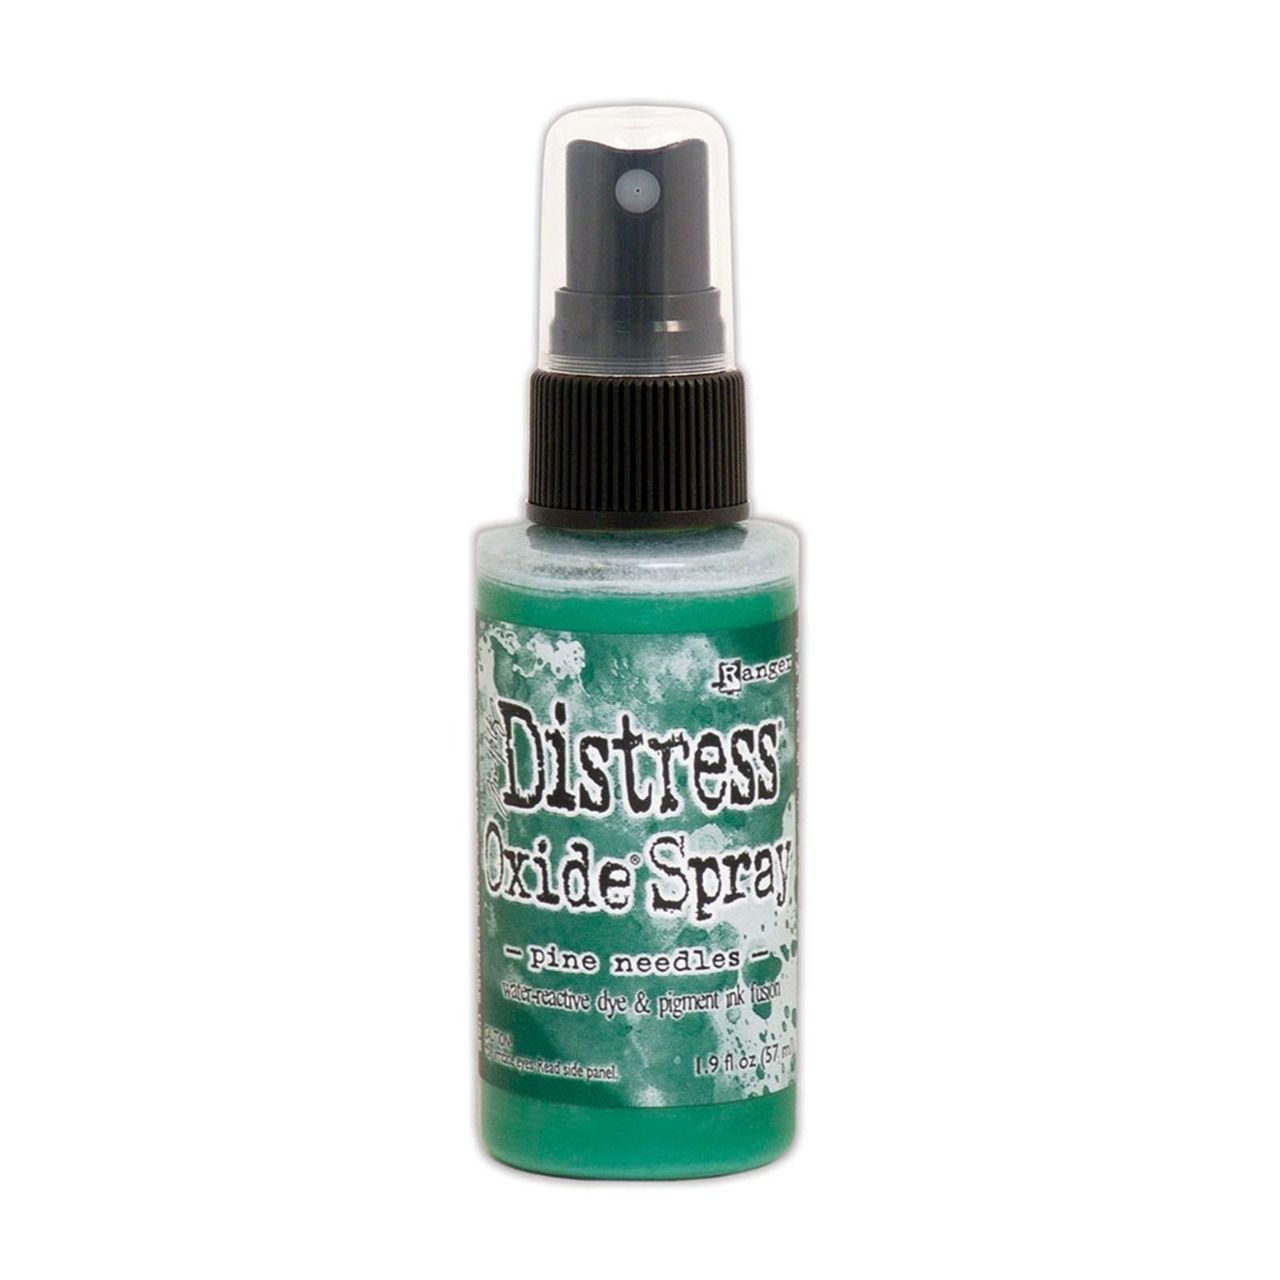 Distress spray oxide : pine needles